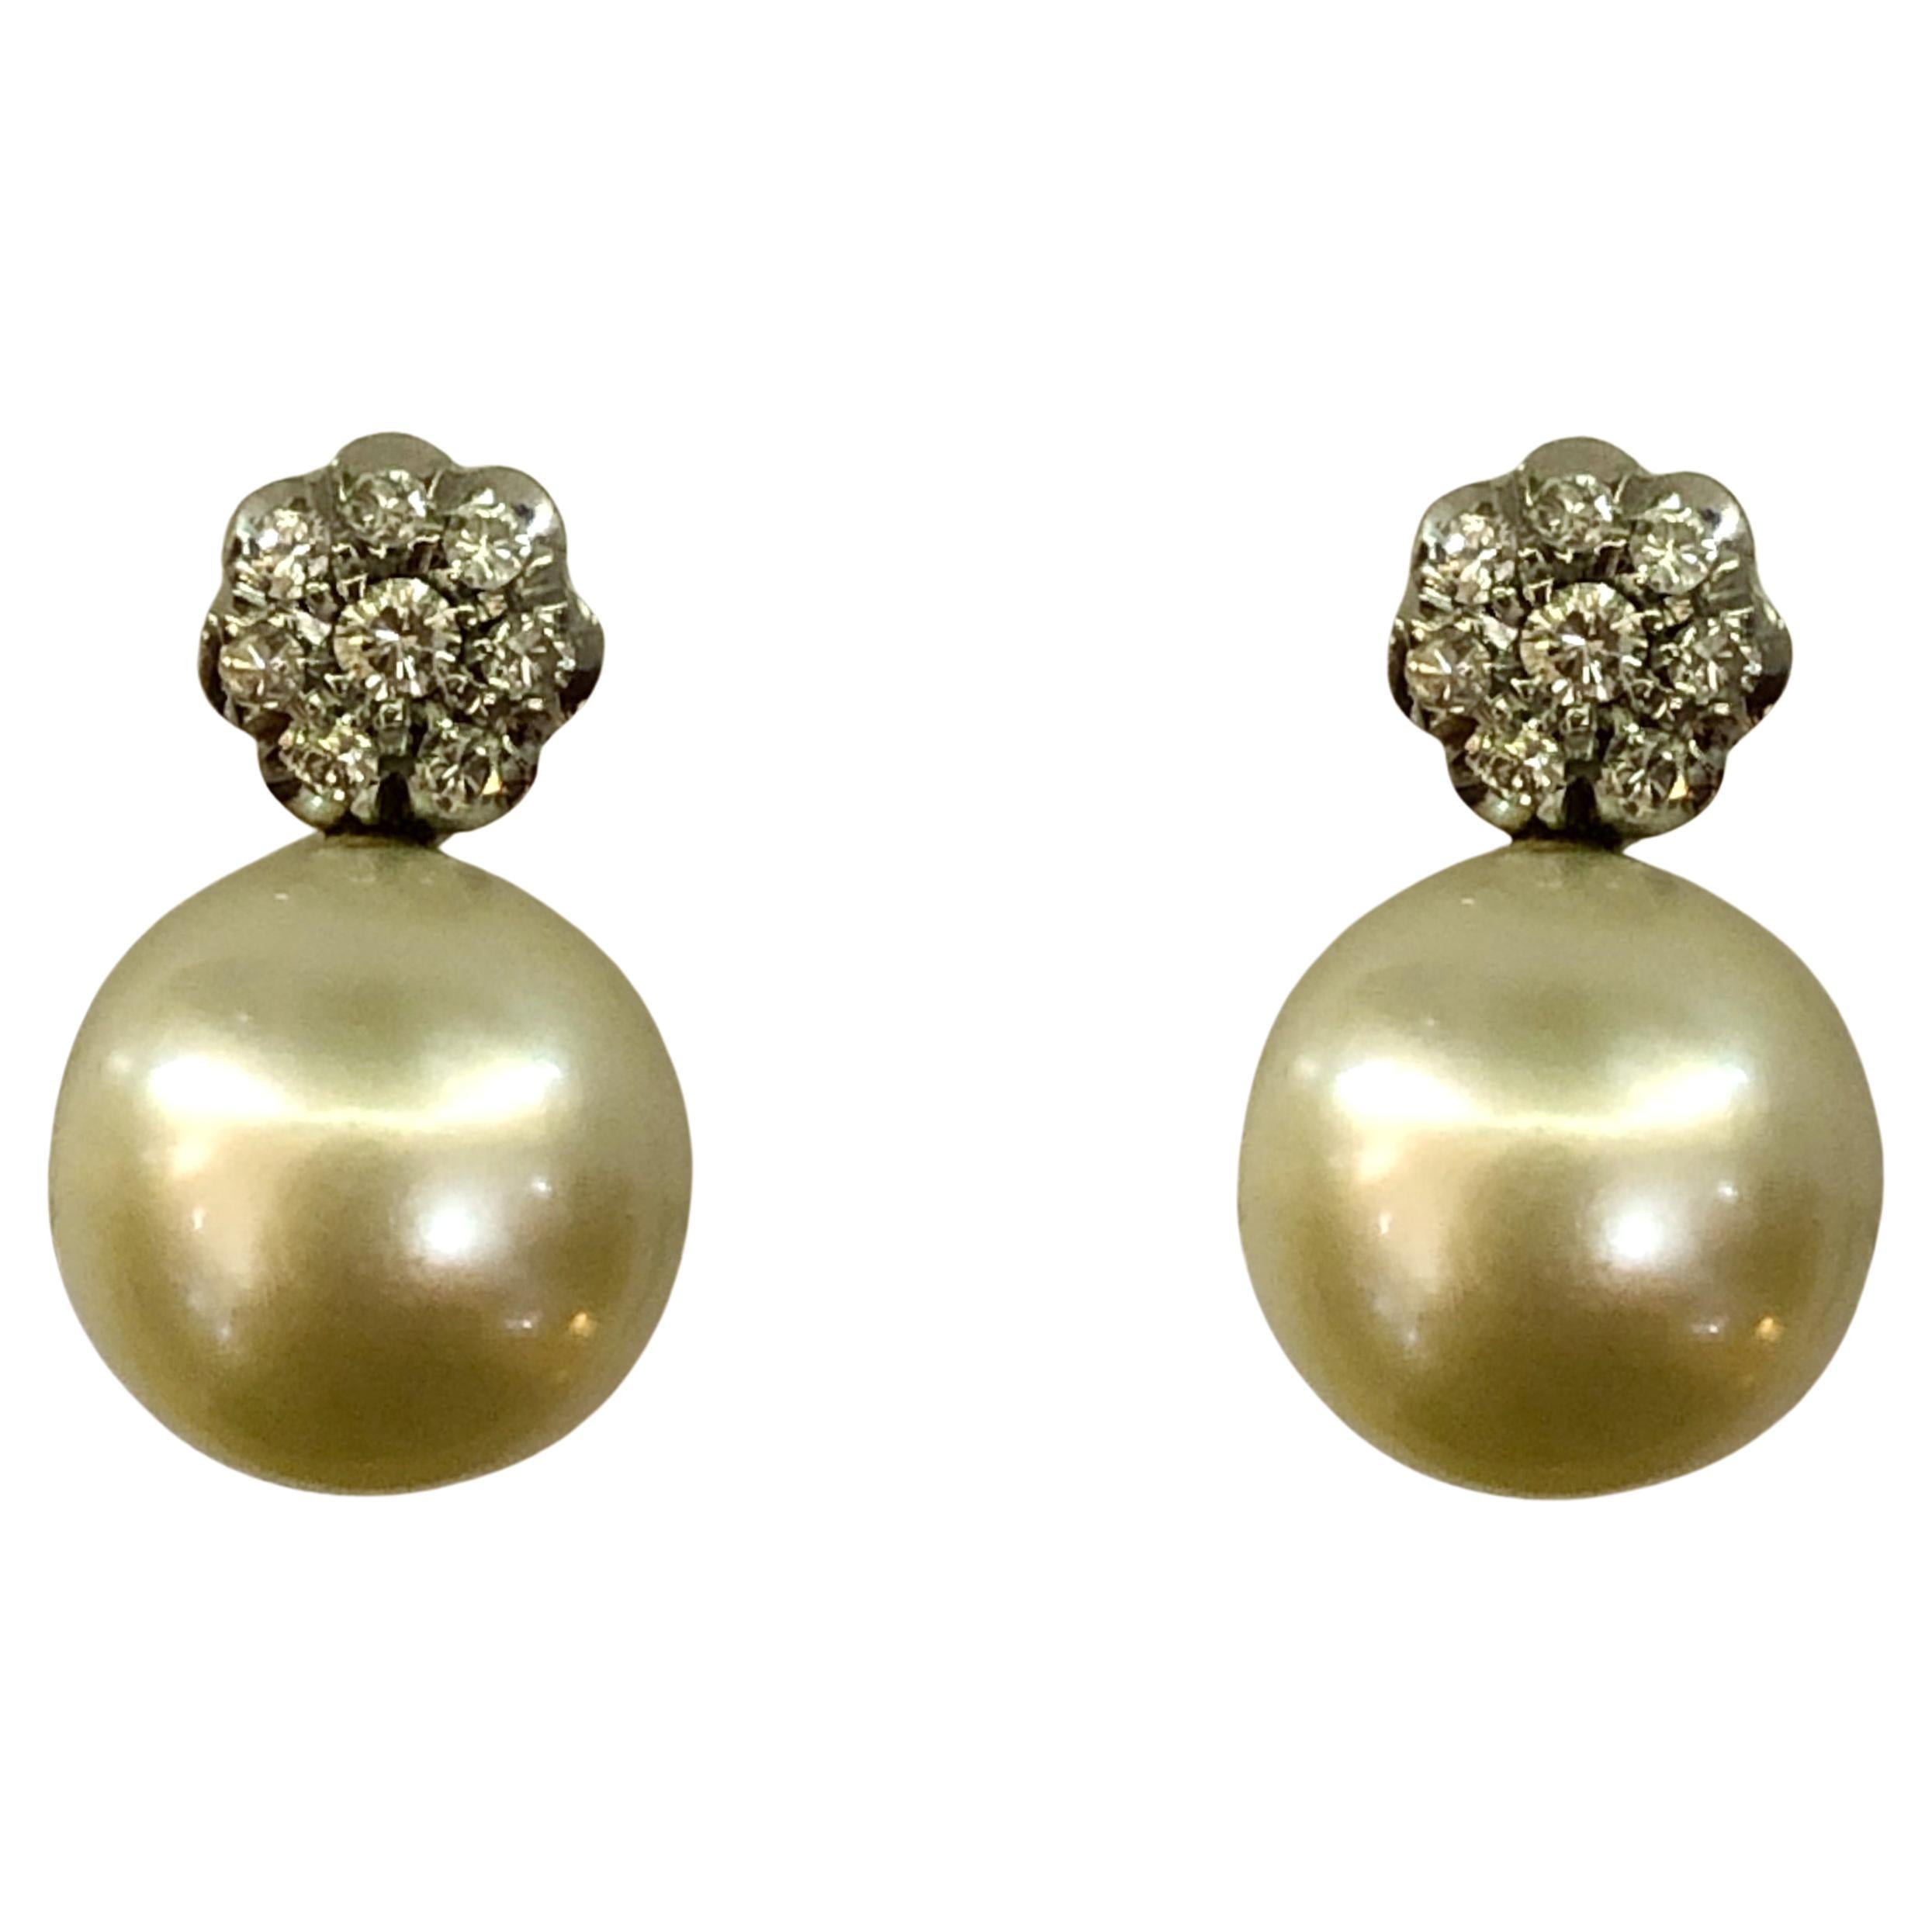 Pair of 18 Karat White Gold Pearl and Diamond Earrings